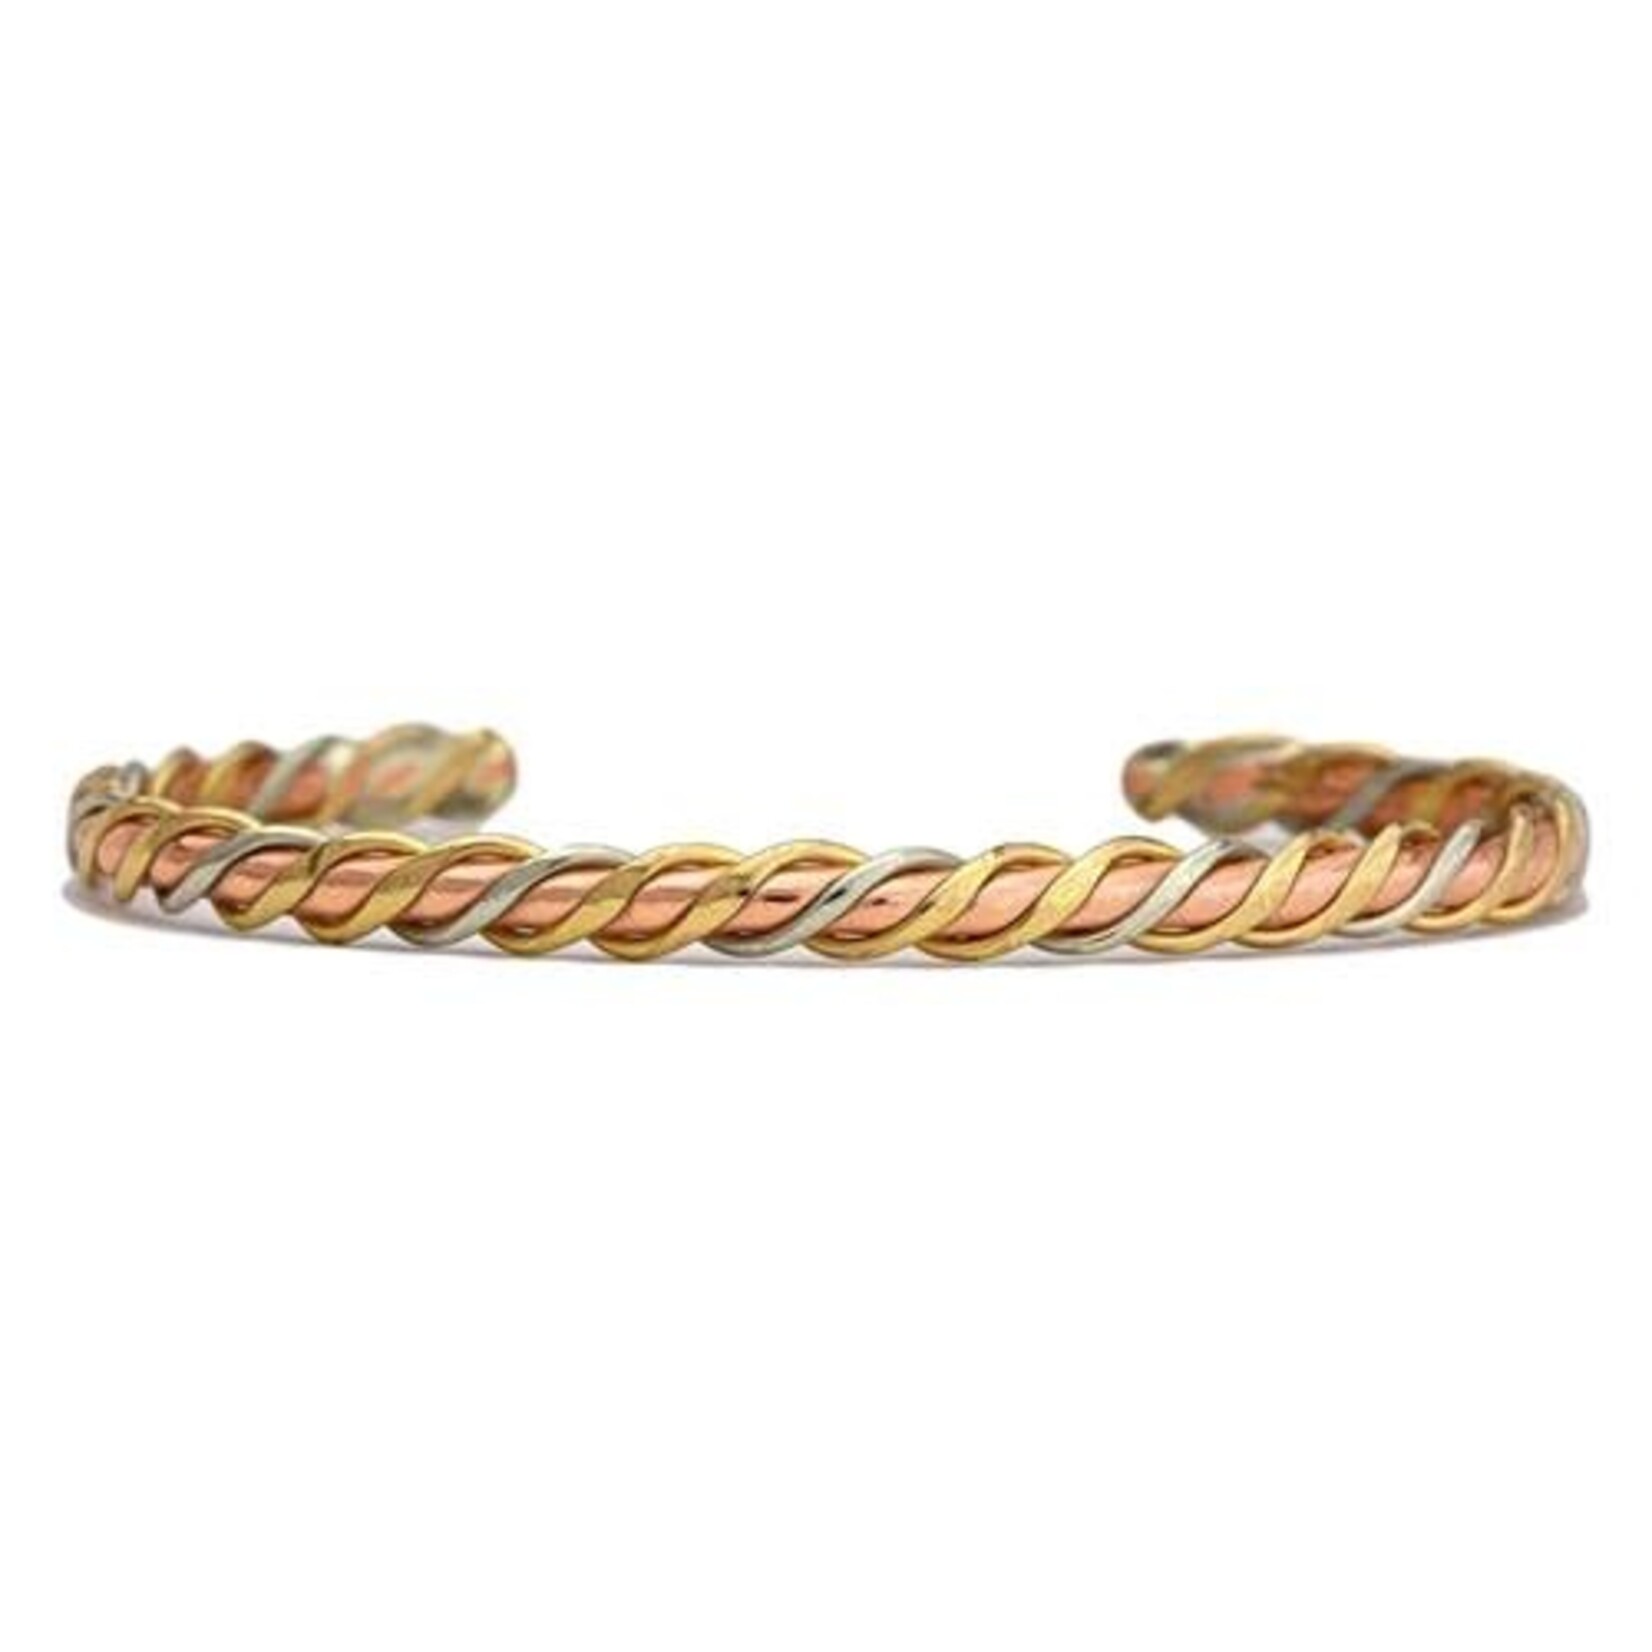 Sergio Lub Copper Bracelets Sergio Lub Copper Bracelet - $30